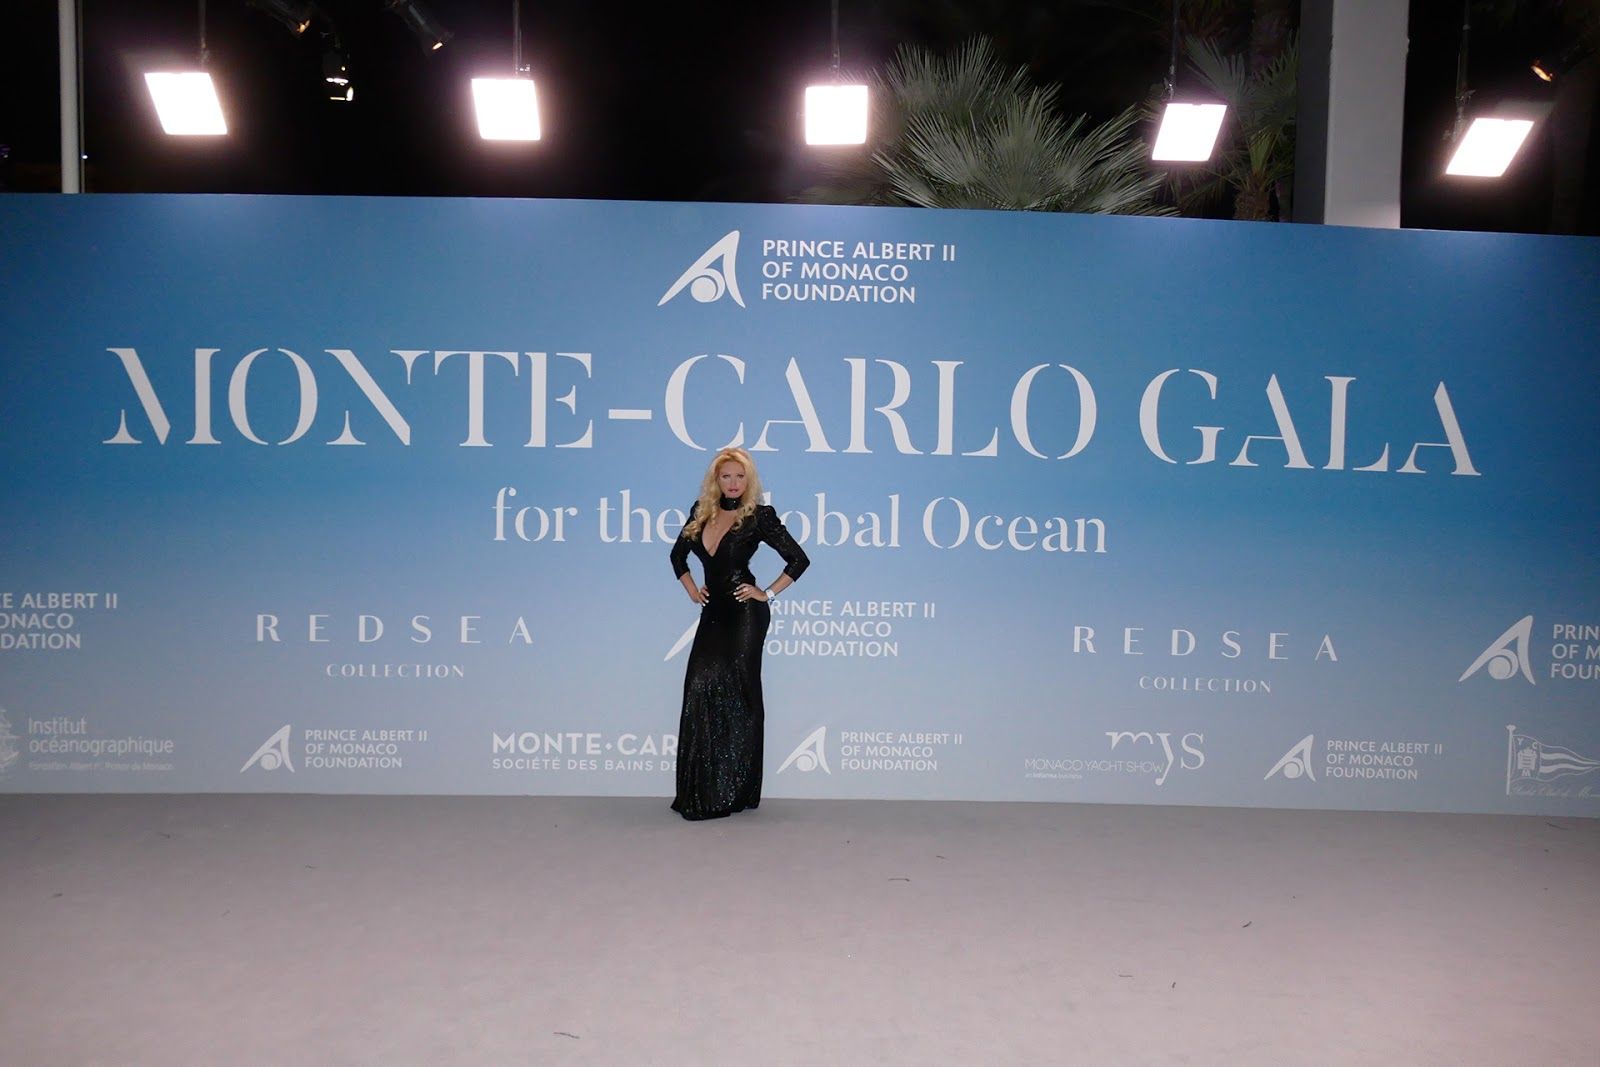 Il “Monte-Carlo Gala for the Global Ocean” 2018 - immagine 1